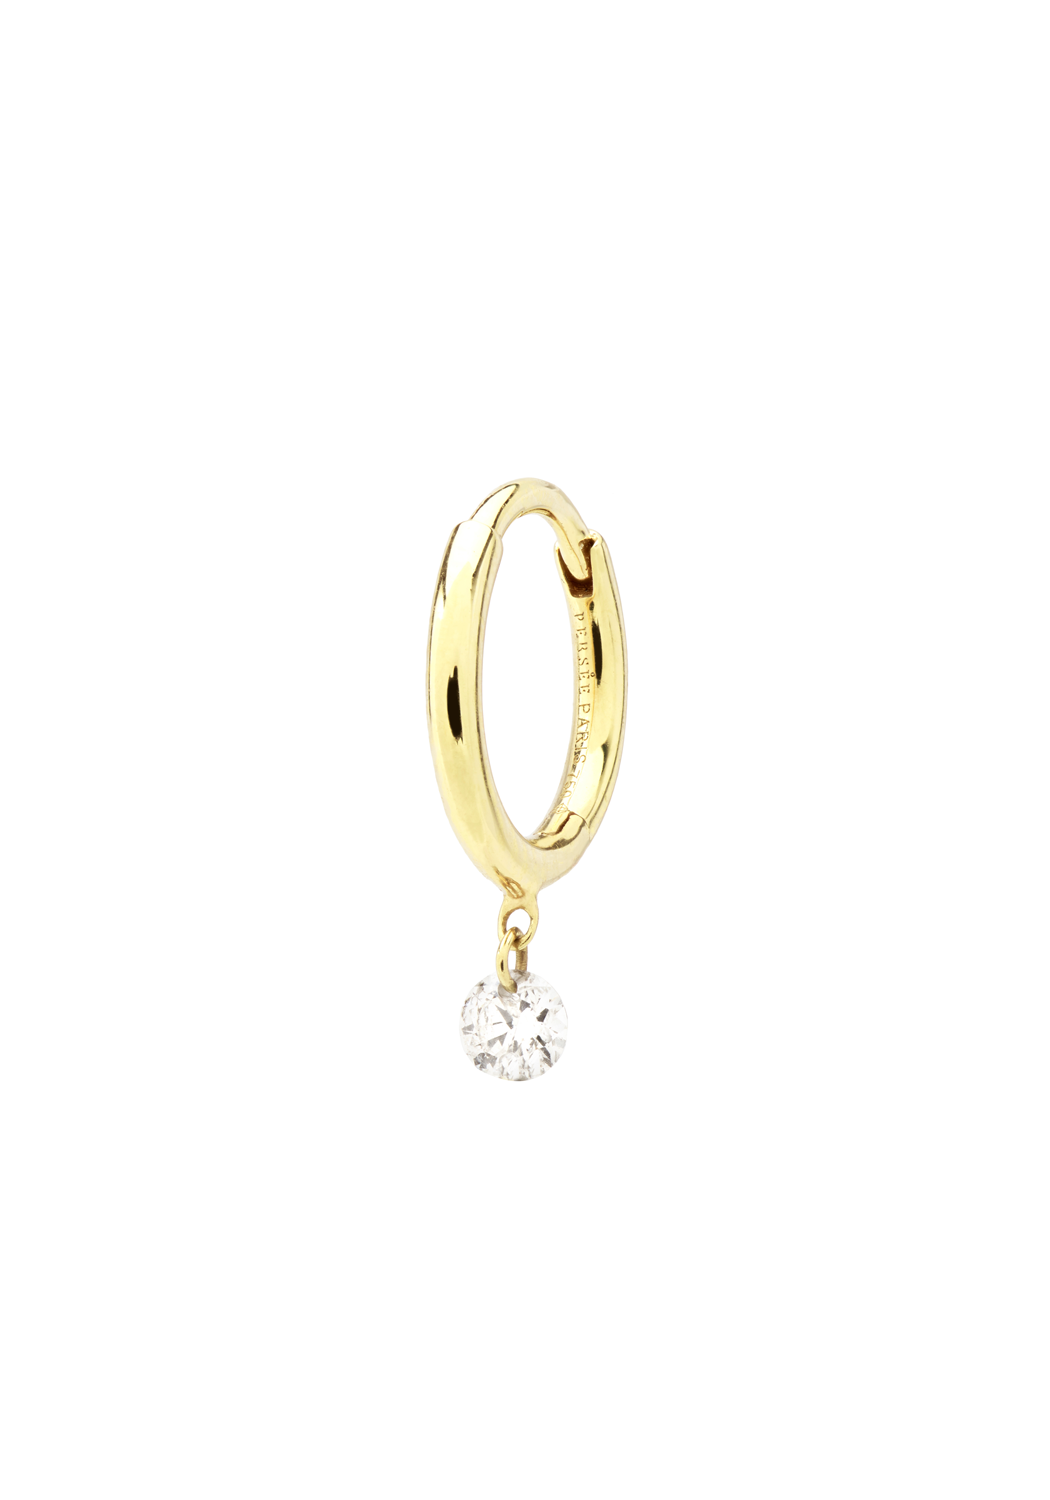 Persée Paris 18K Gold Solitaire Diamond Hoop Earring | Choose Gold